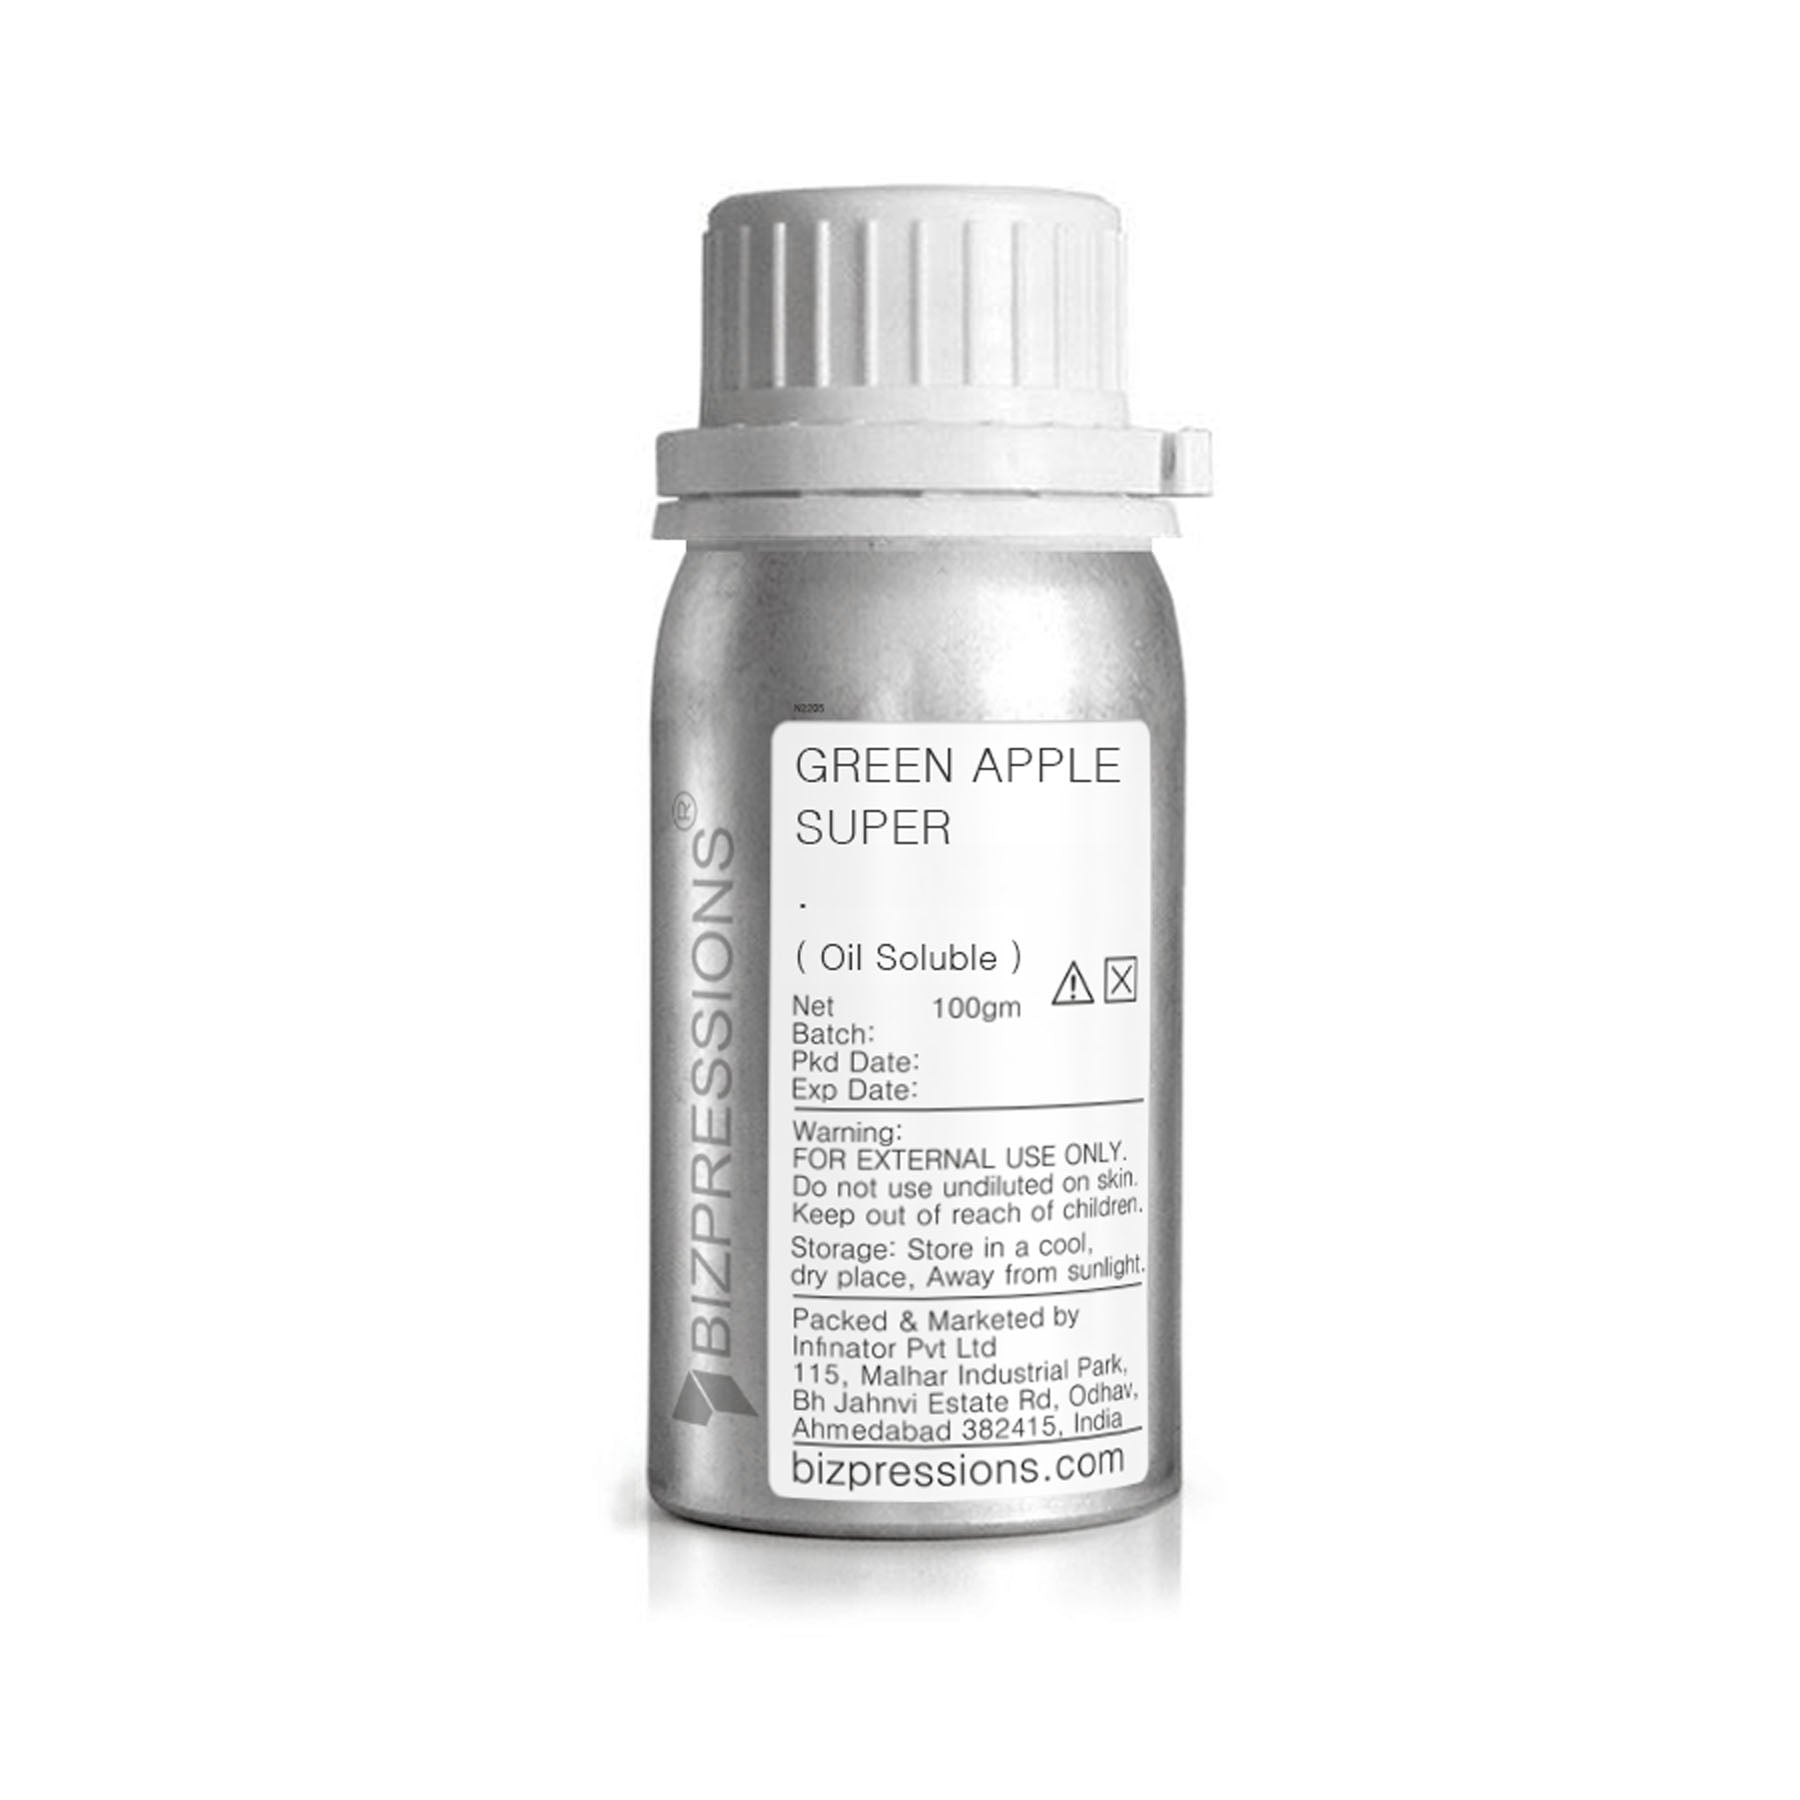 GREEN APPLE SUPER - Fragrance ( Oil Soluble ) - 100 gm